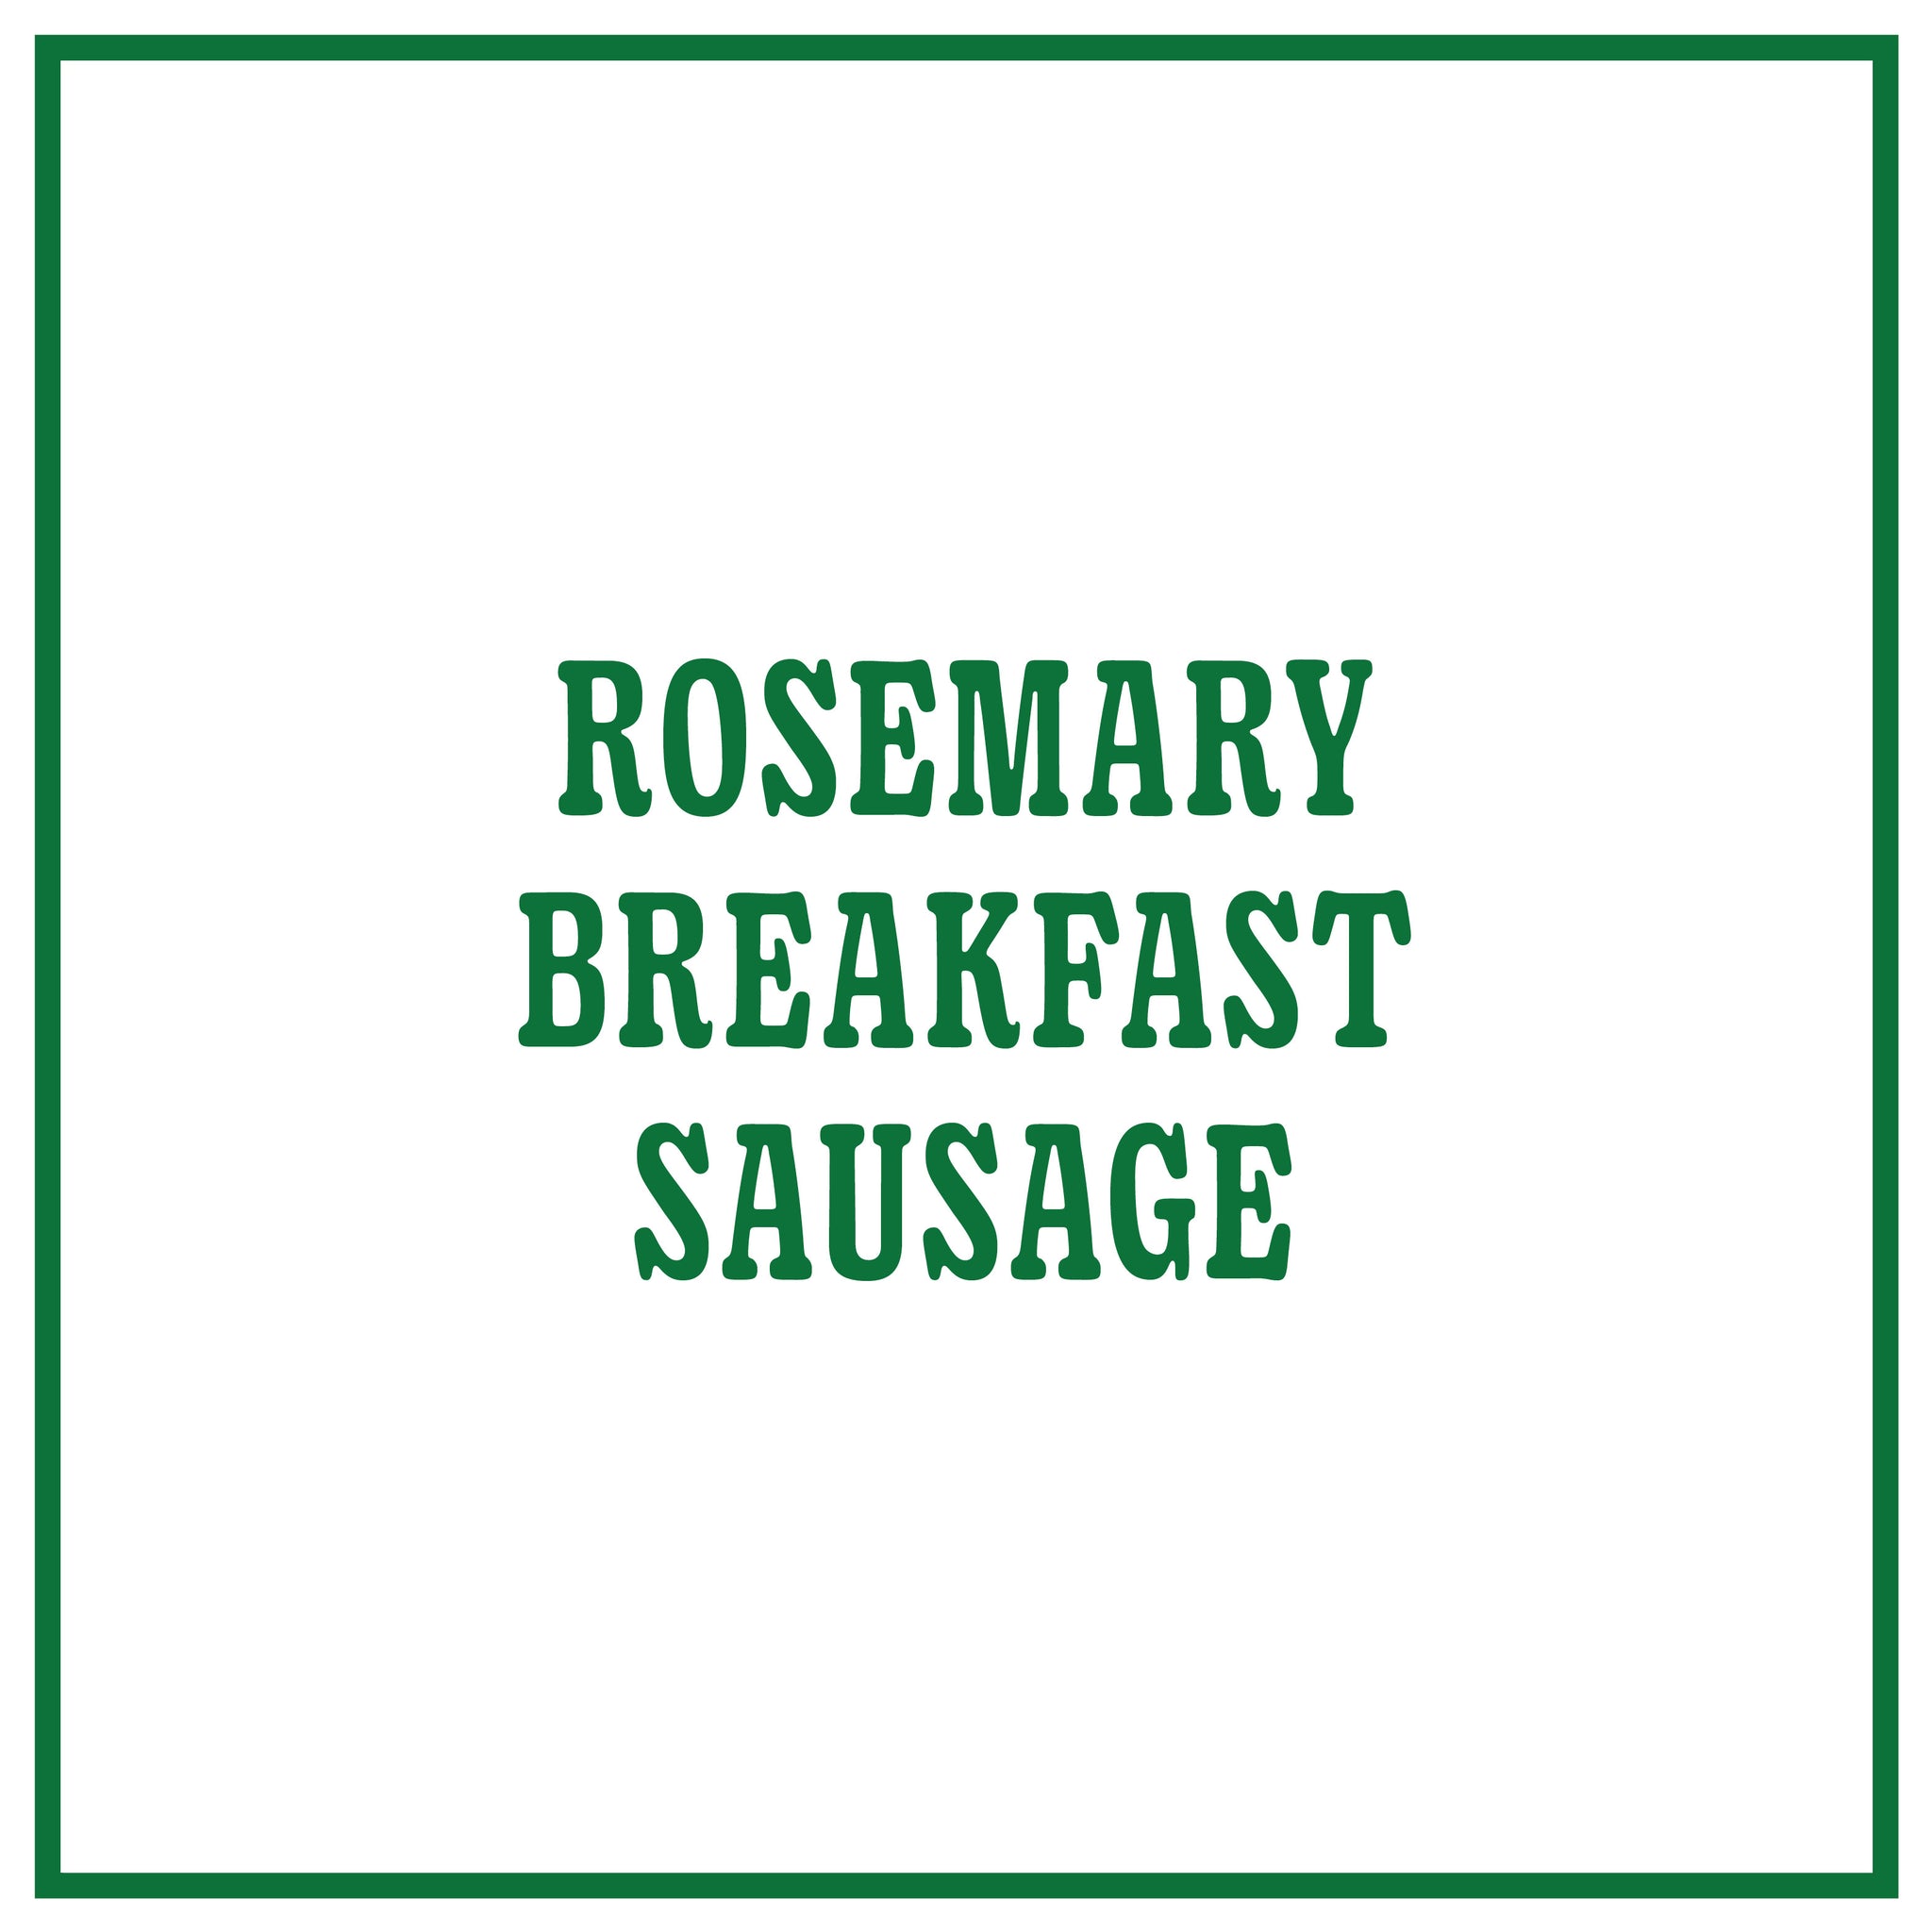 Rosemary Breakfast Sausage